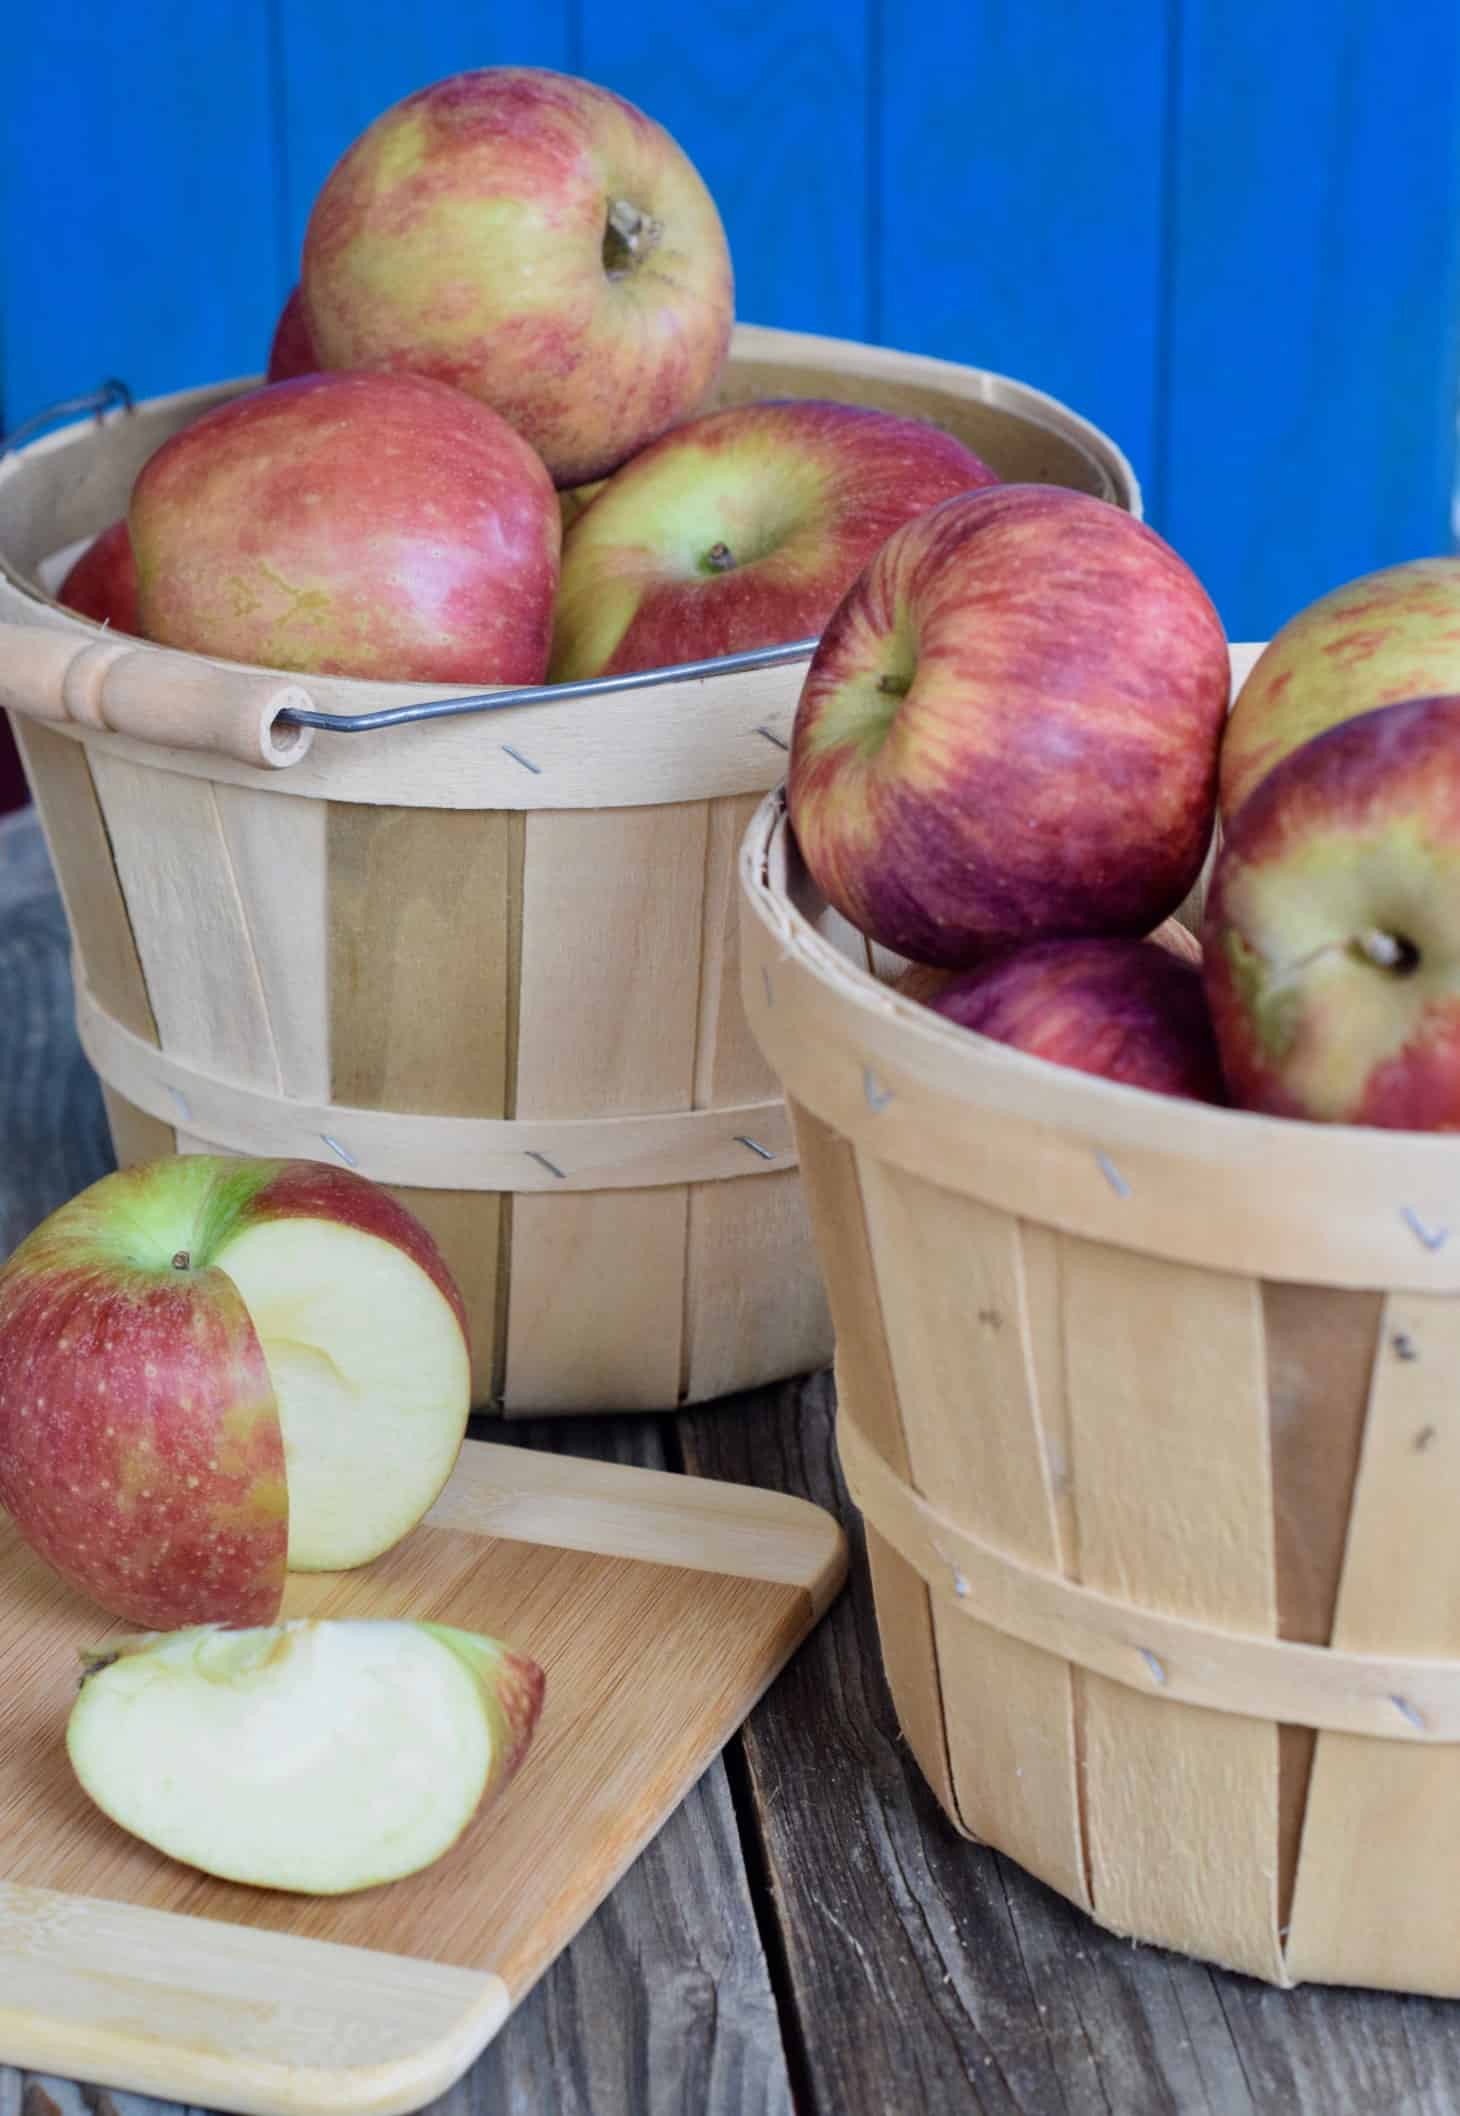 Apples in bushel basket with 1 sliced open